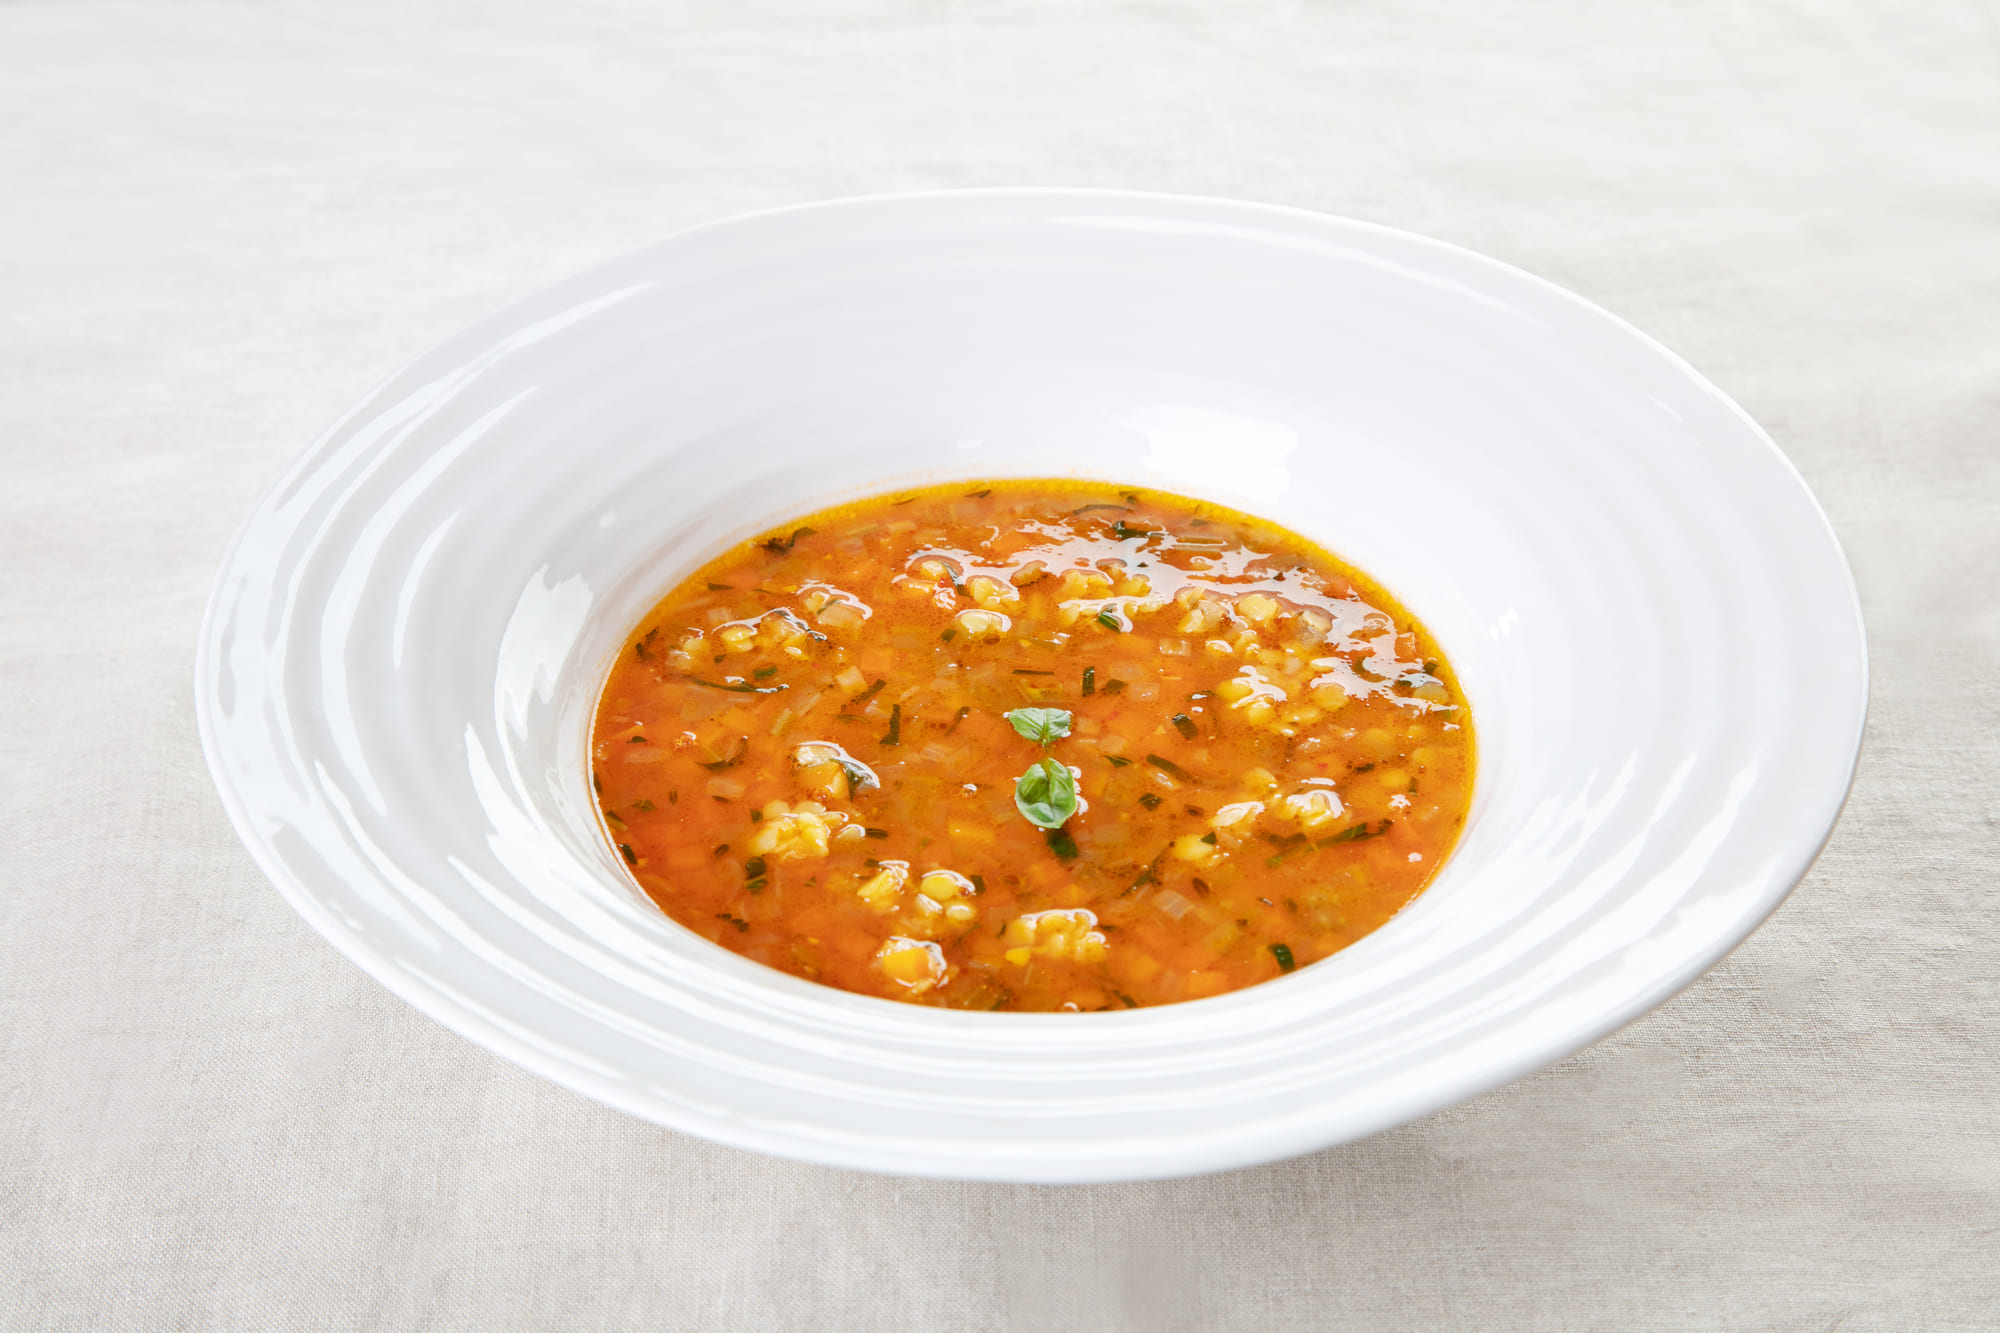 Суп из трёх видов чечевицы на бульоне из весенних овощей